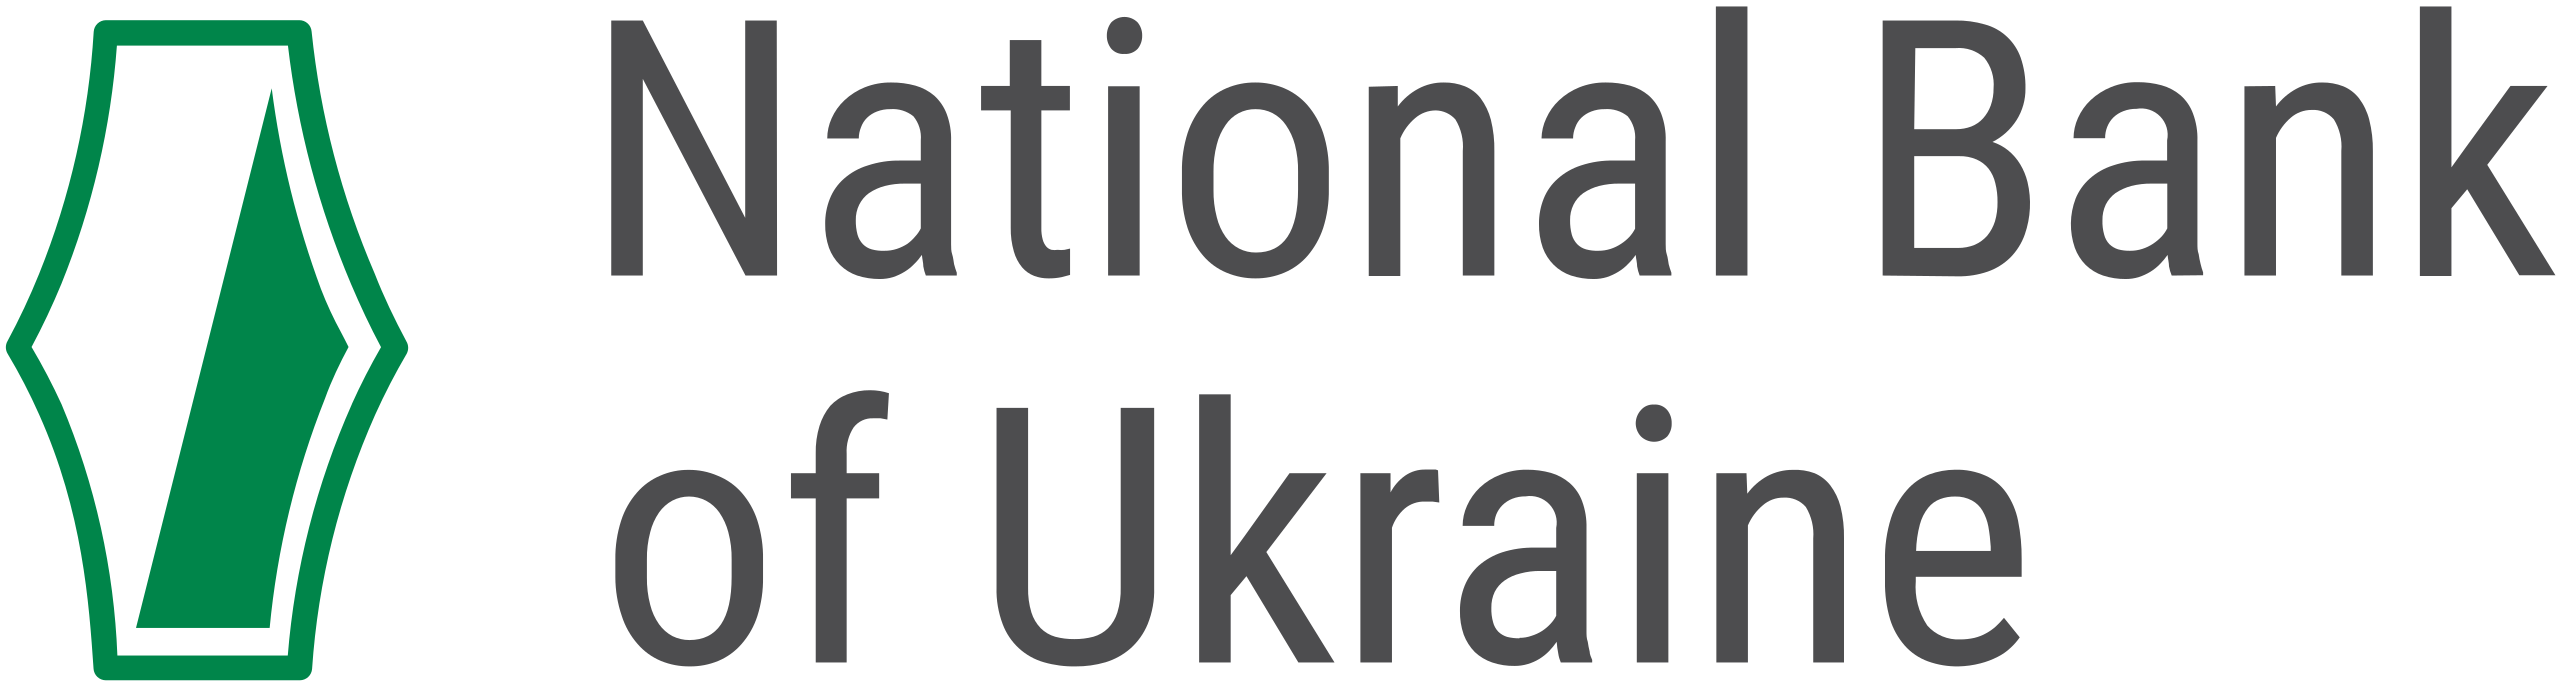 File:National Bank of Ukraine logo.svg - Wikipedia